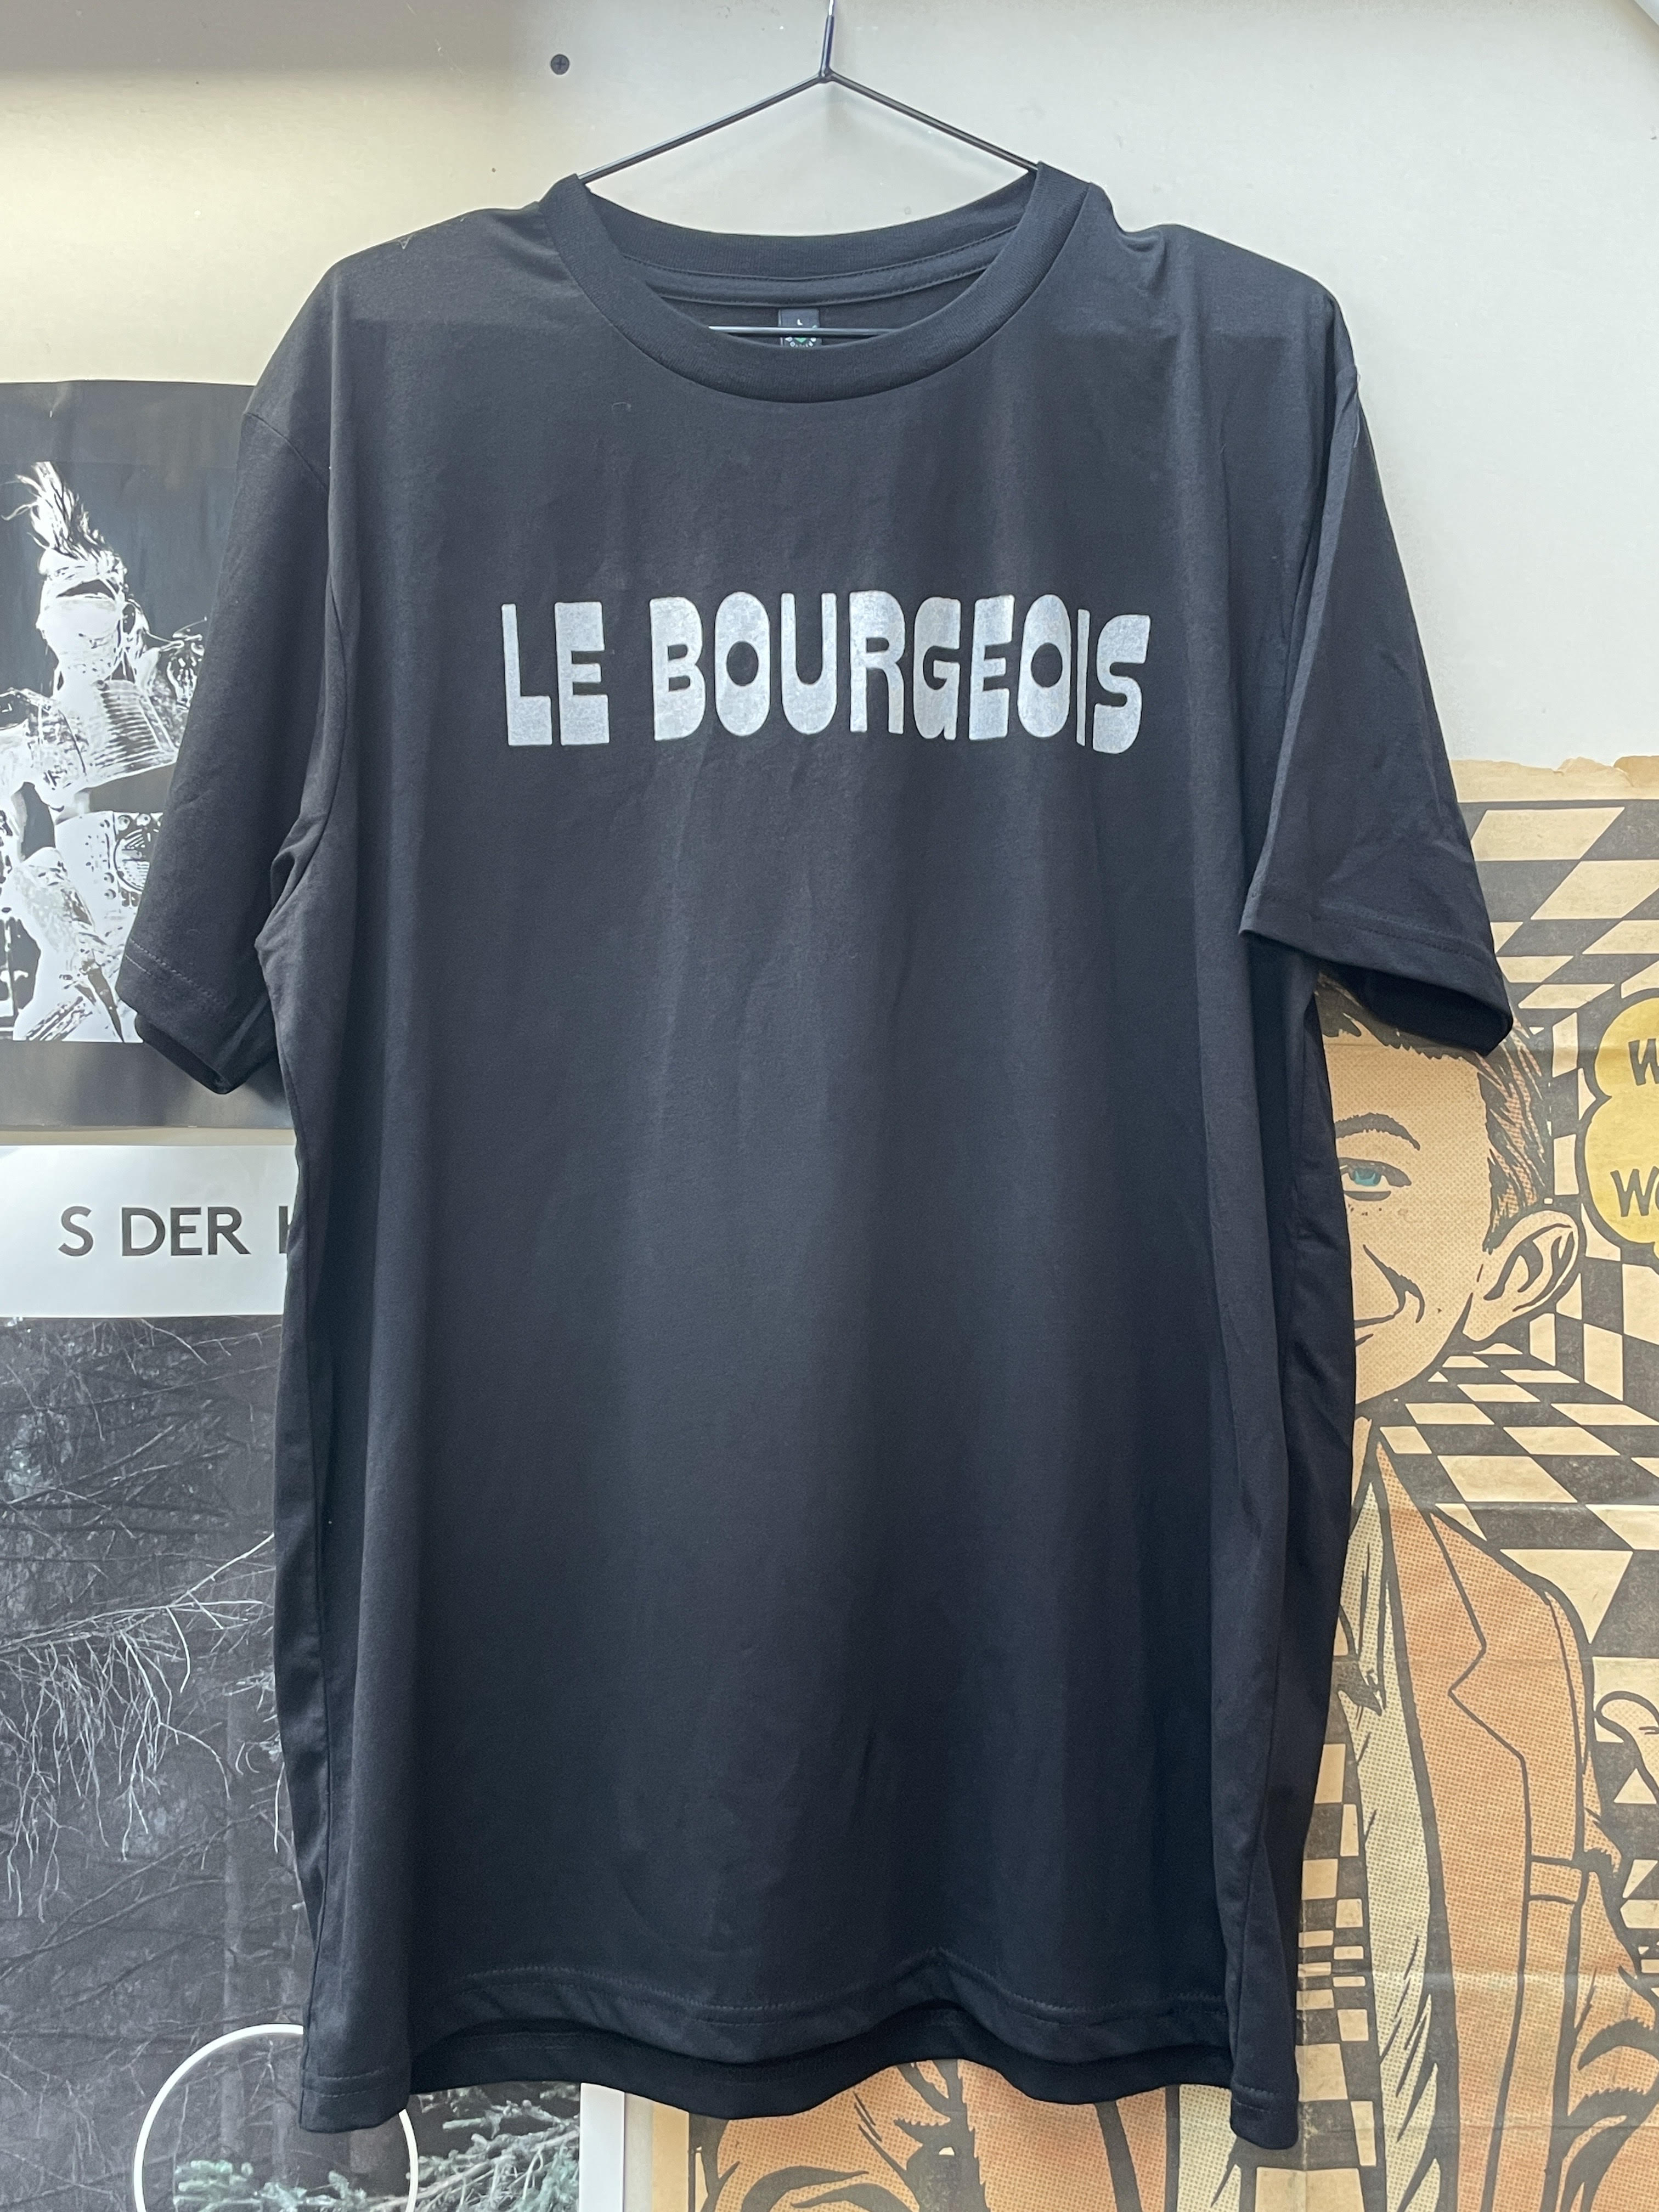 Le Bourgeois t-shirt